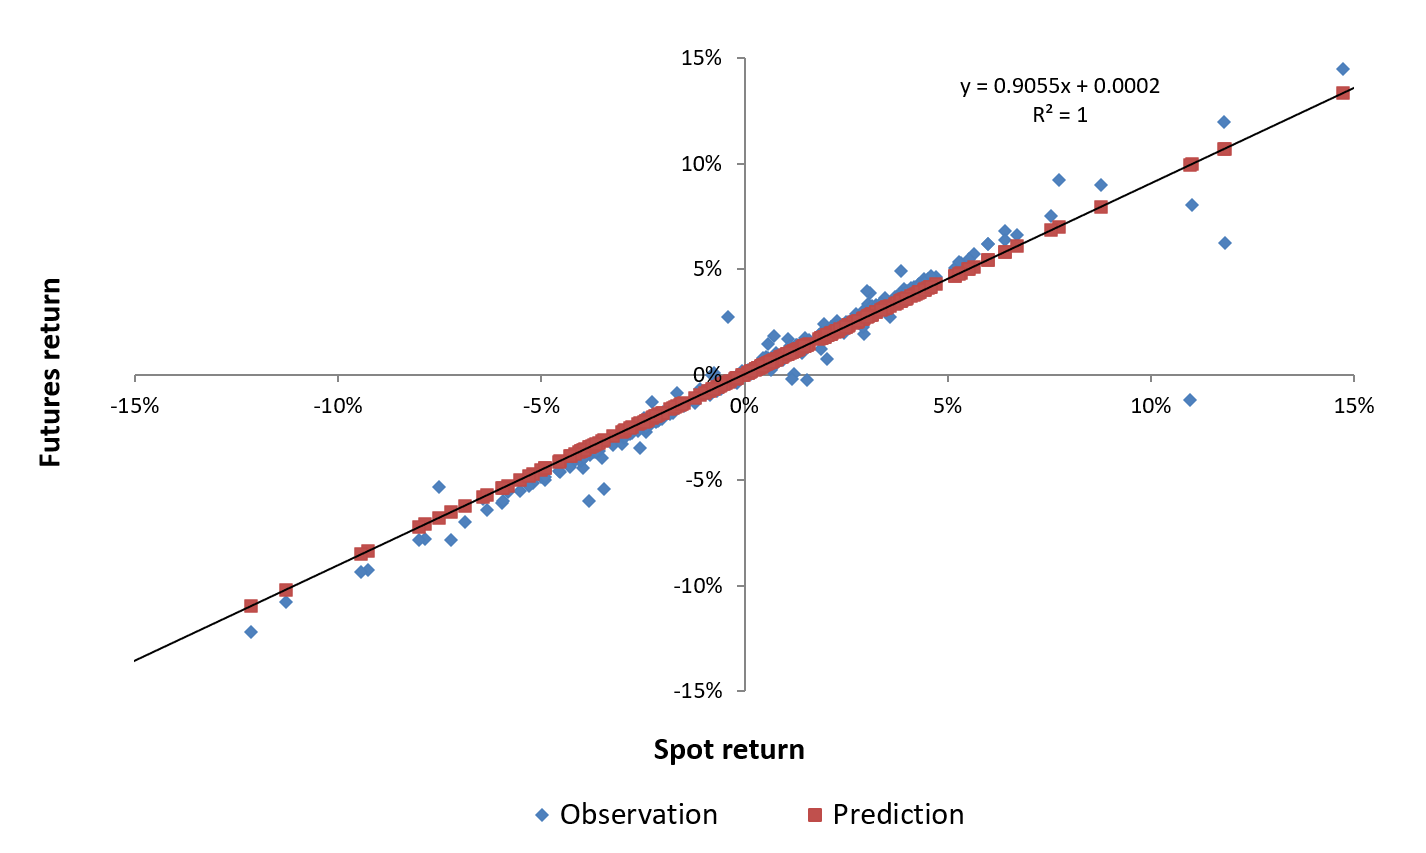 Linear regression of WTI spot return on futures (1 month) return